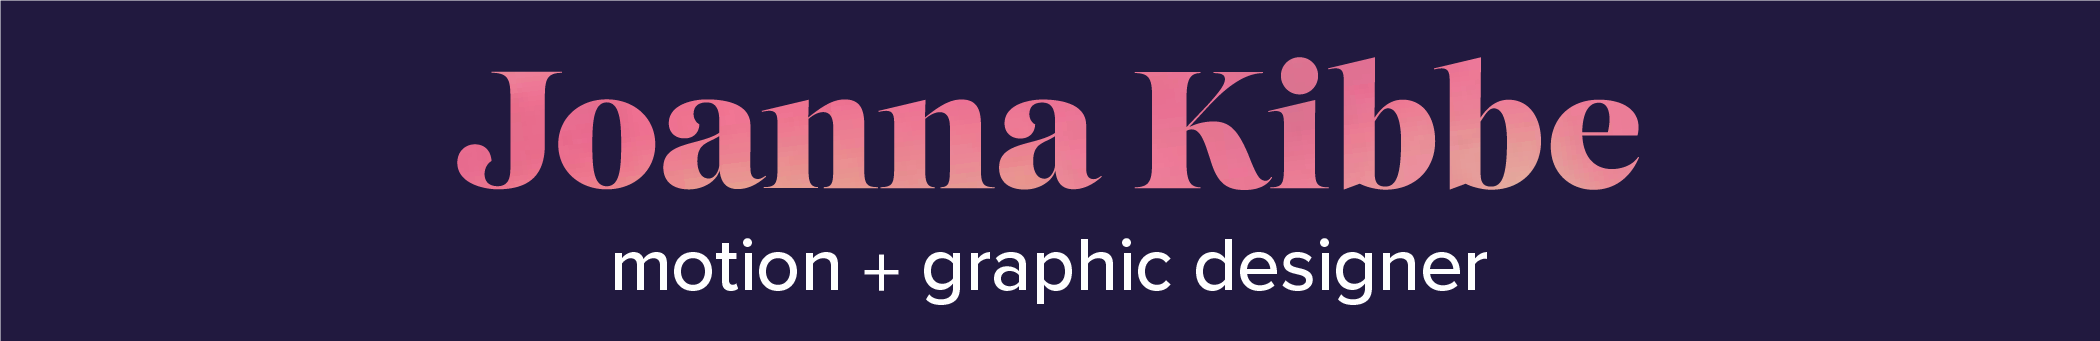 Joanna Kibbe brand